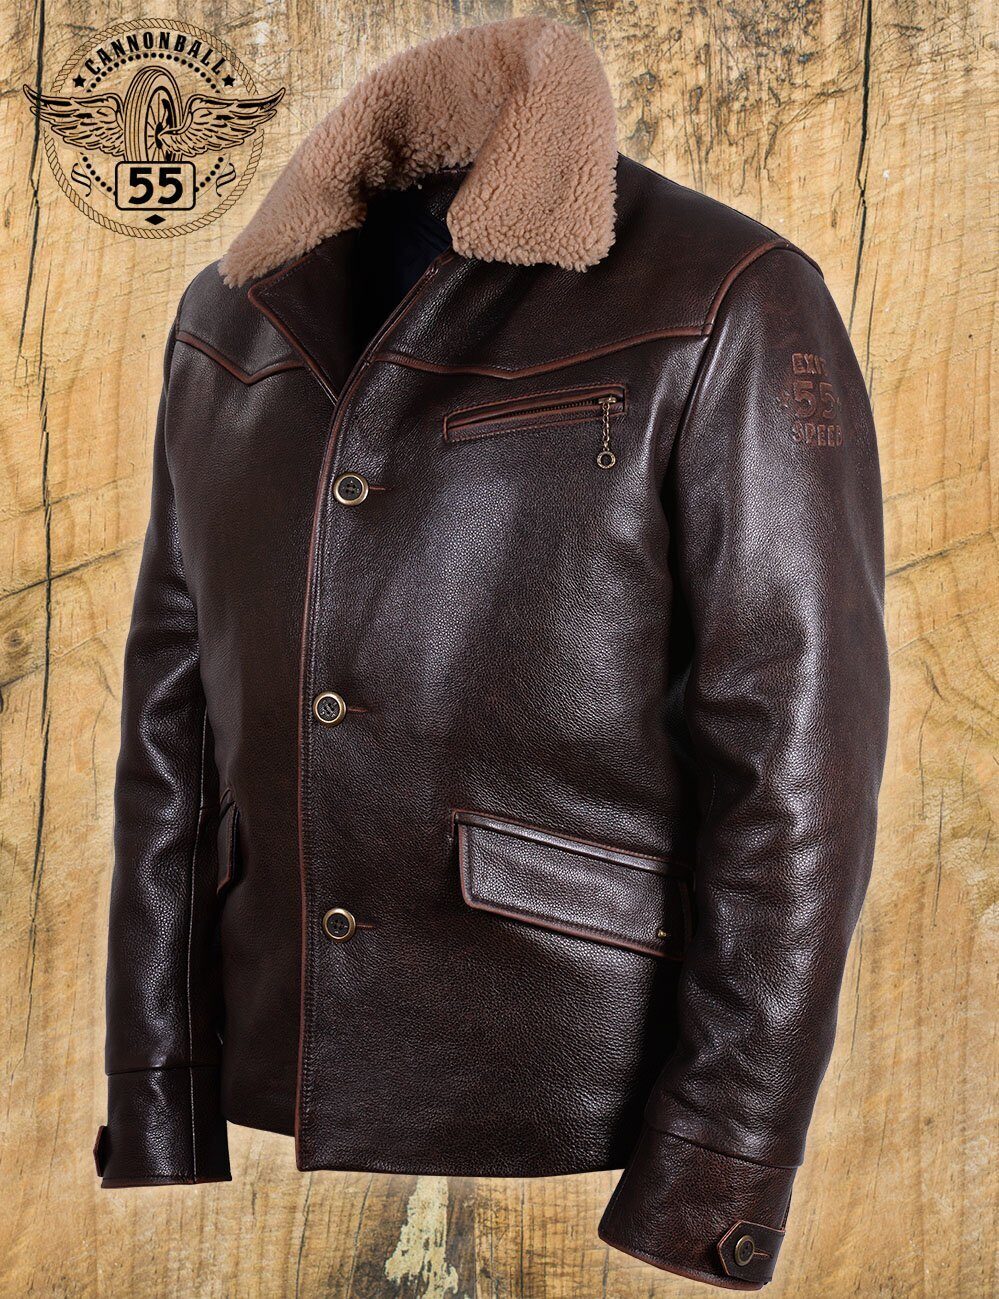 Милано 163 мужские куртки. Кожаные куртки Falcon Knight m10. Brando куртка кожаная London 32. Мужские куртки премиум класса. Кожаные бушлаты из кожи буйвола.